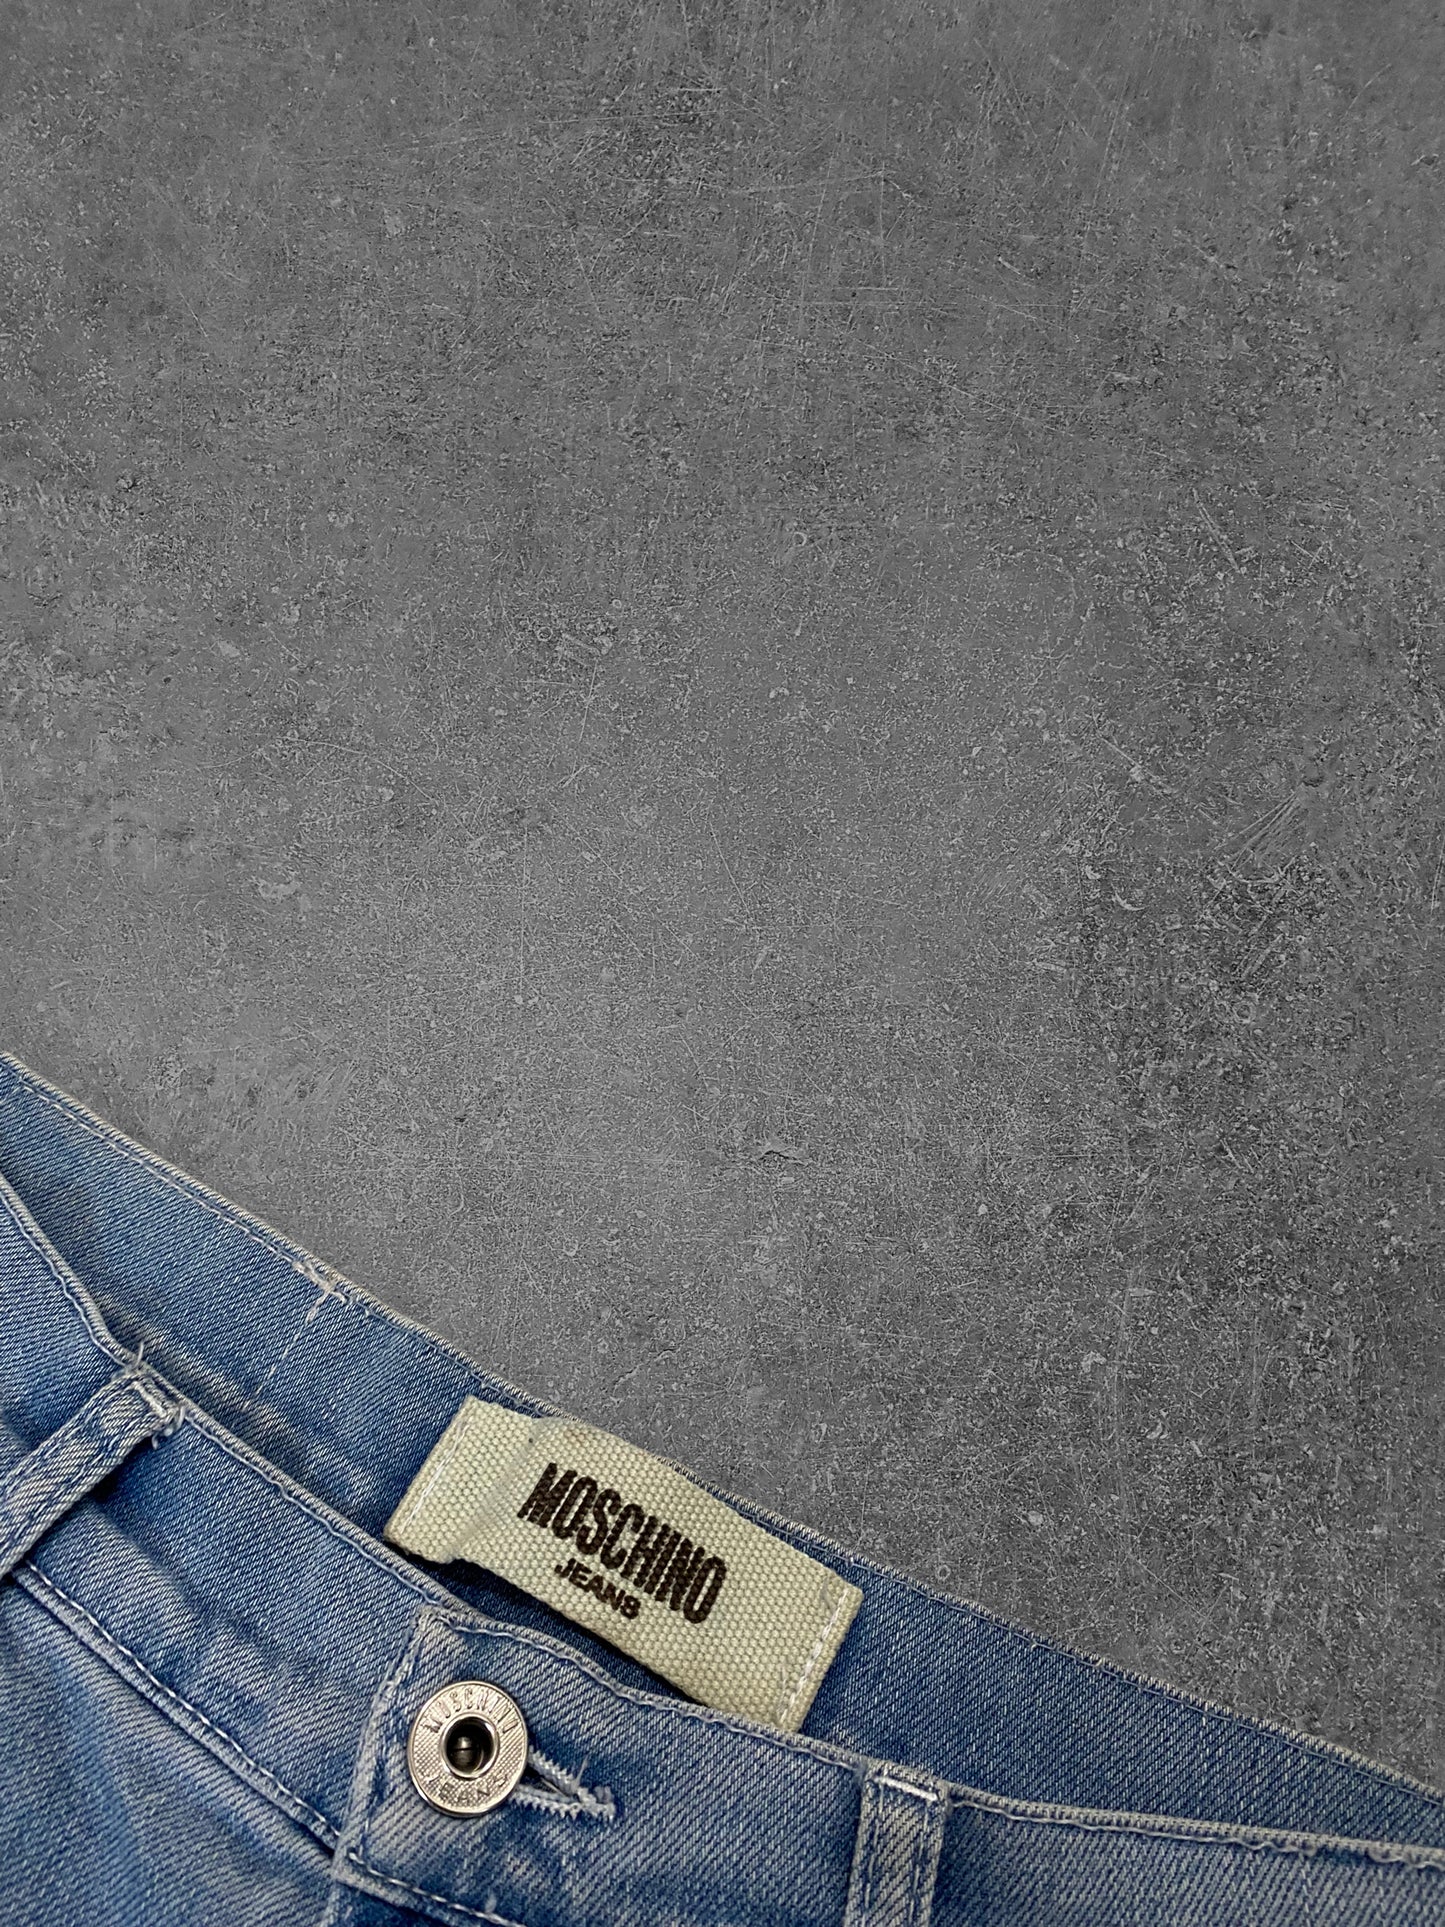 Moschino Jeans (W30, L30)